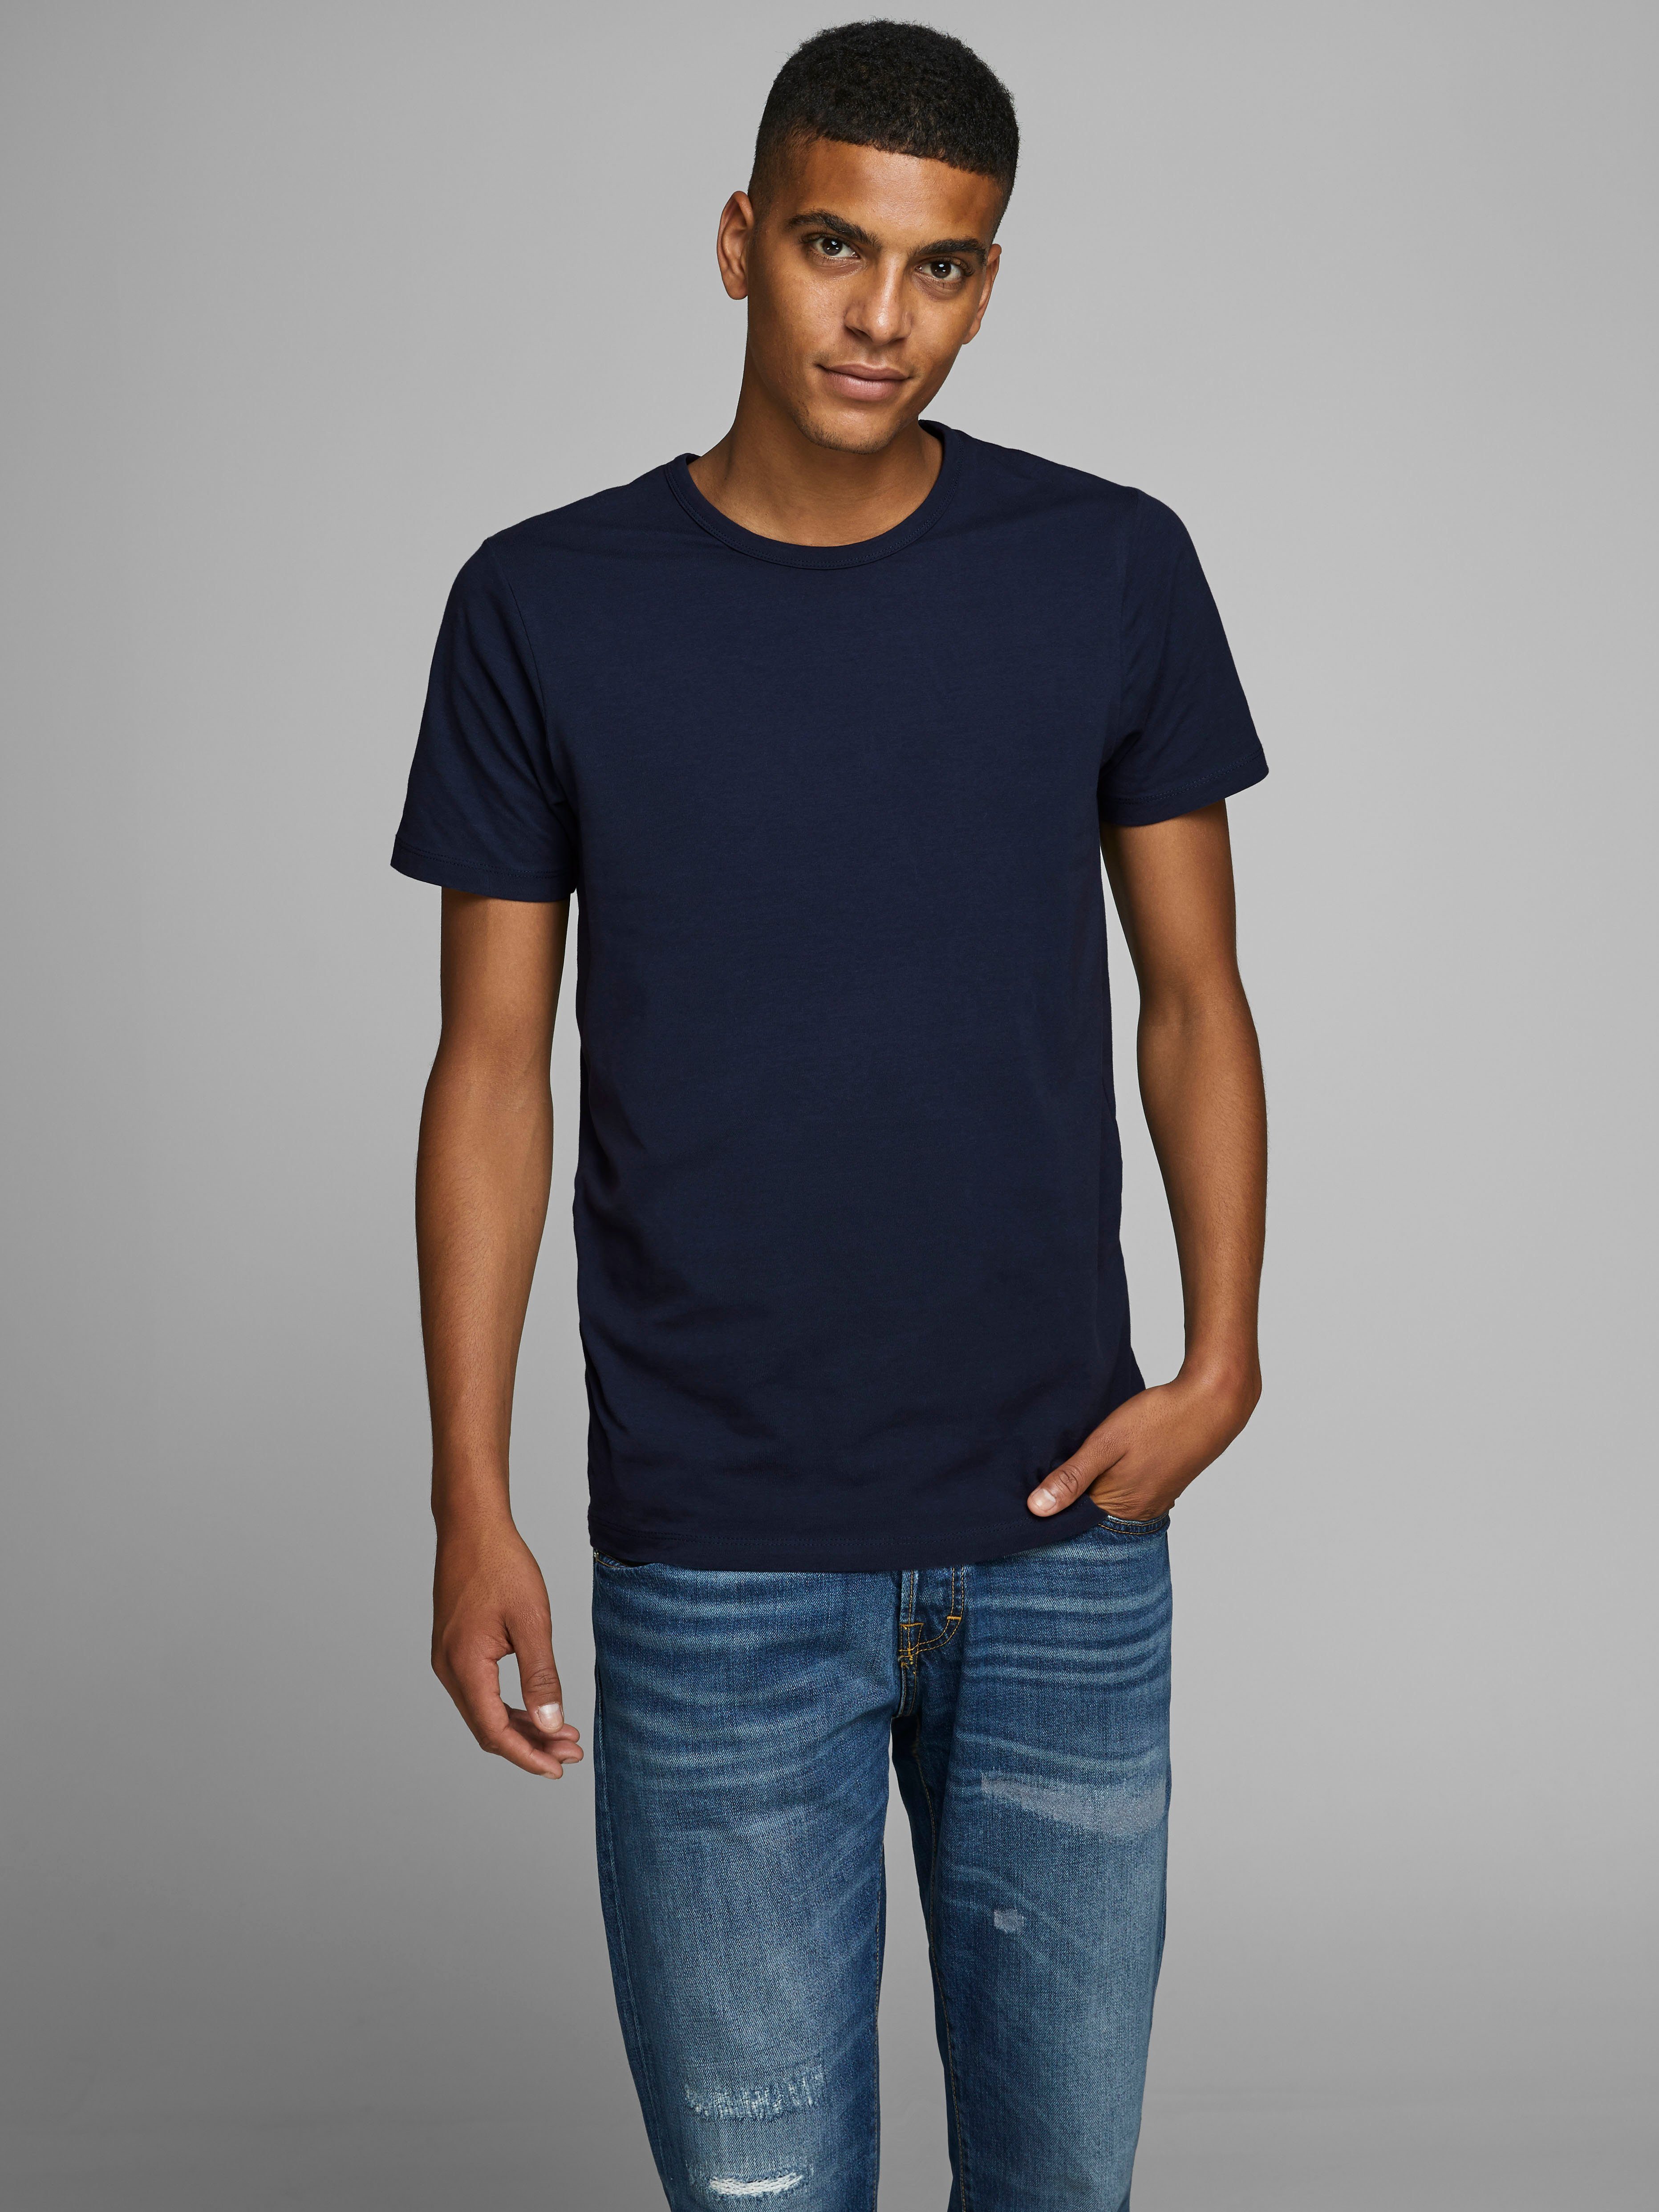 blue TEE T-Shirt & navy Jones BASIC O-NECK Jack